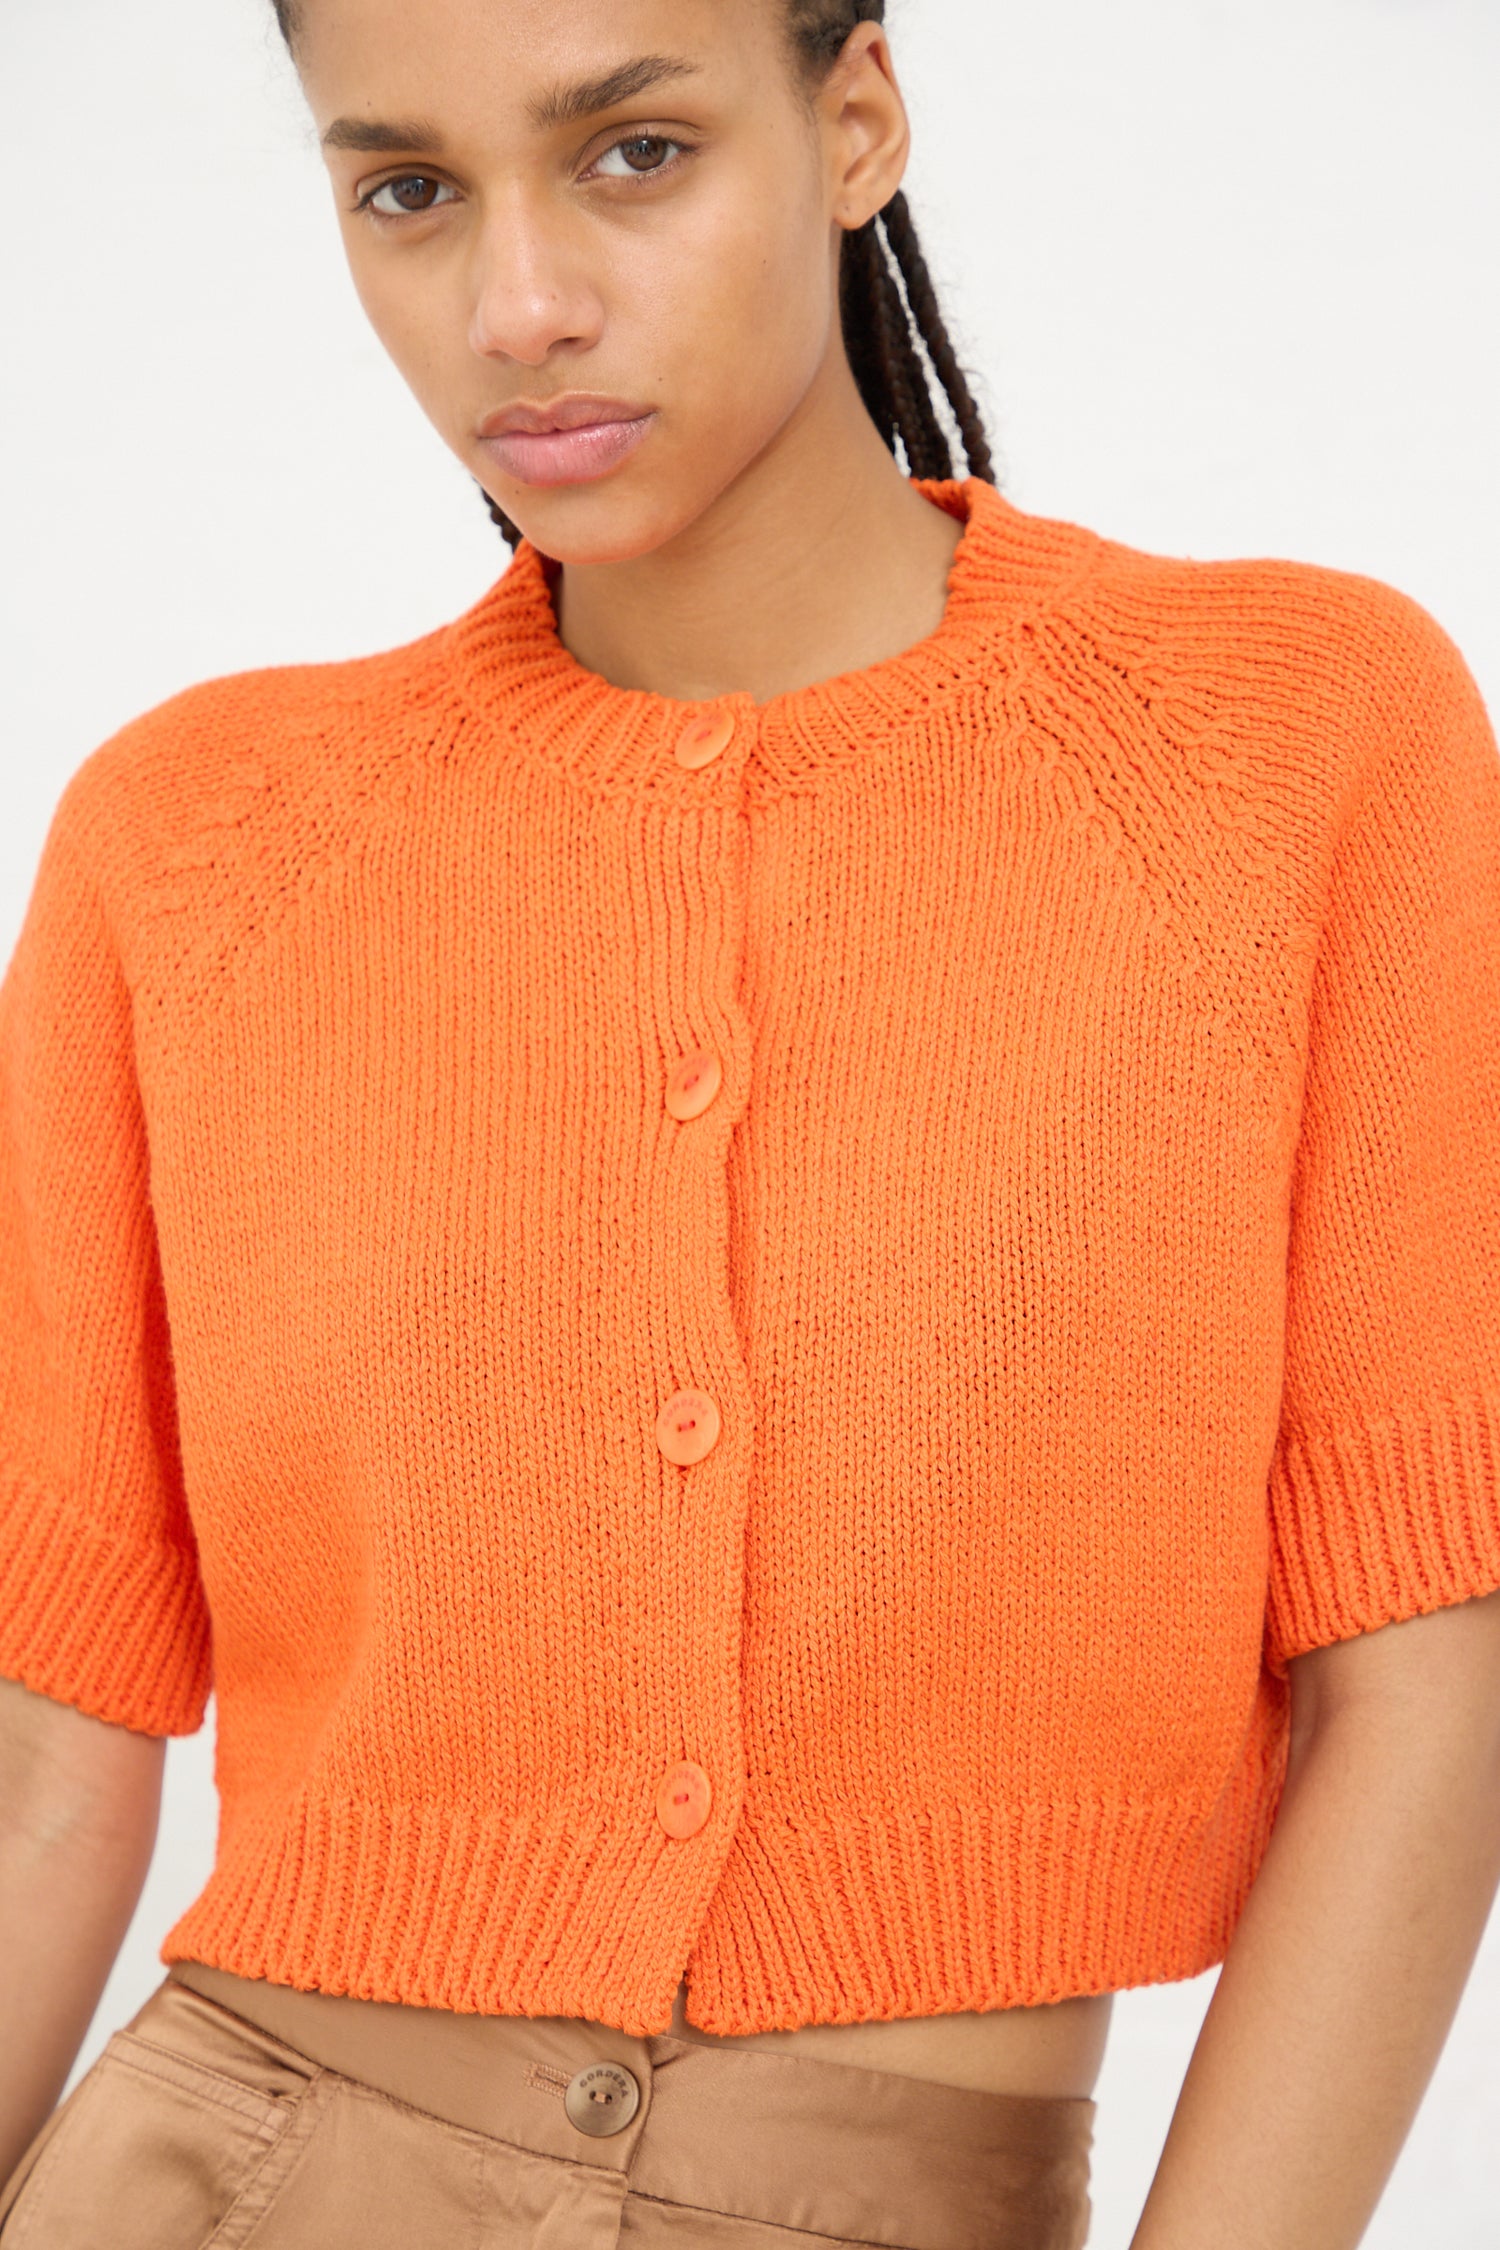 Woman wearing a Cordera Cotton Knit Buttoned Top in Mandarina.